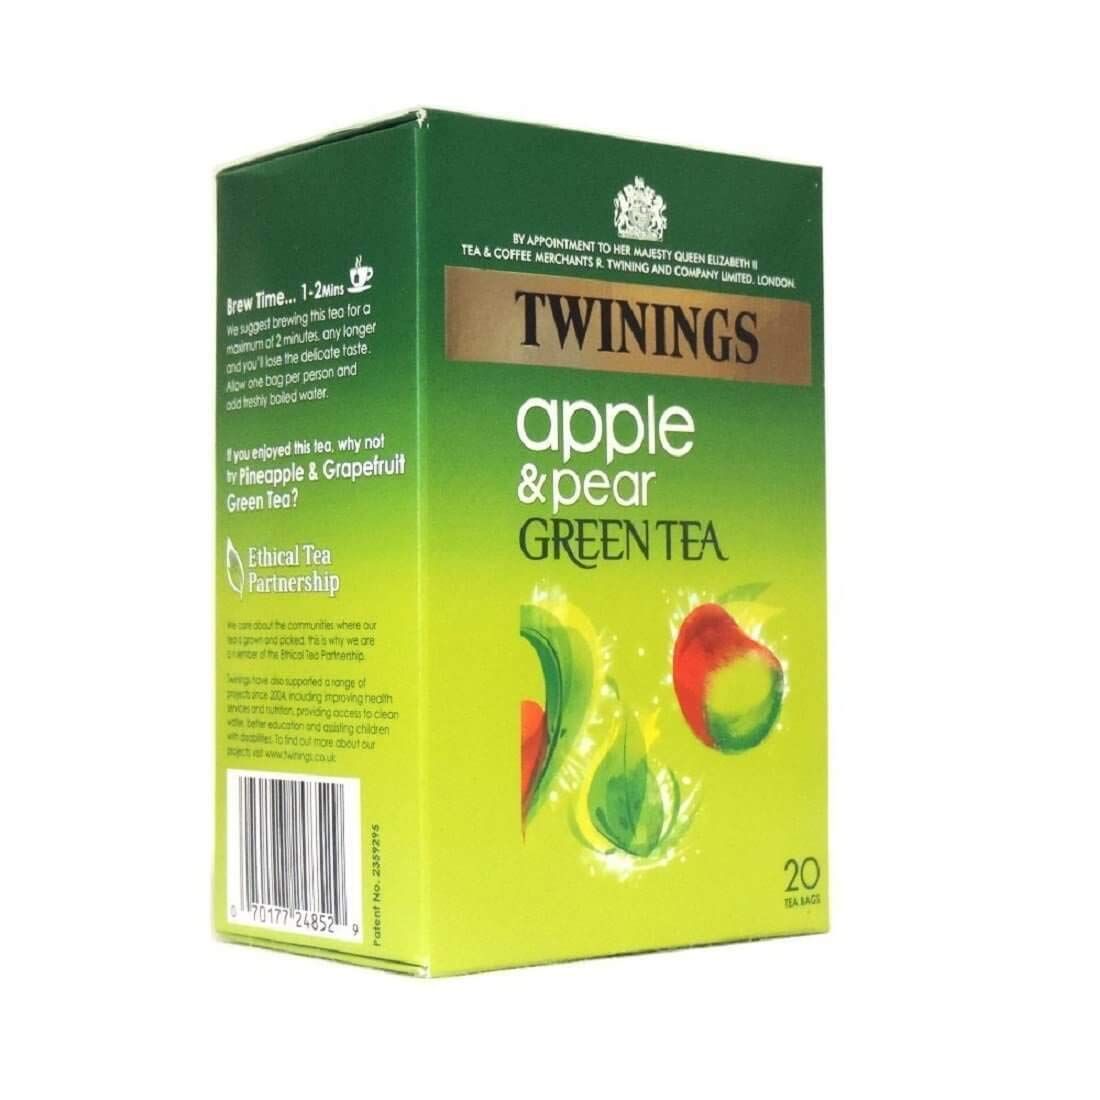 Twinings Apple & Pear Green Tea Image